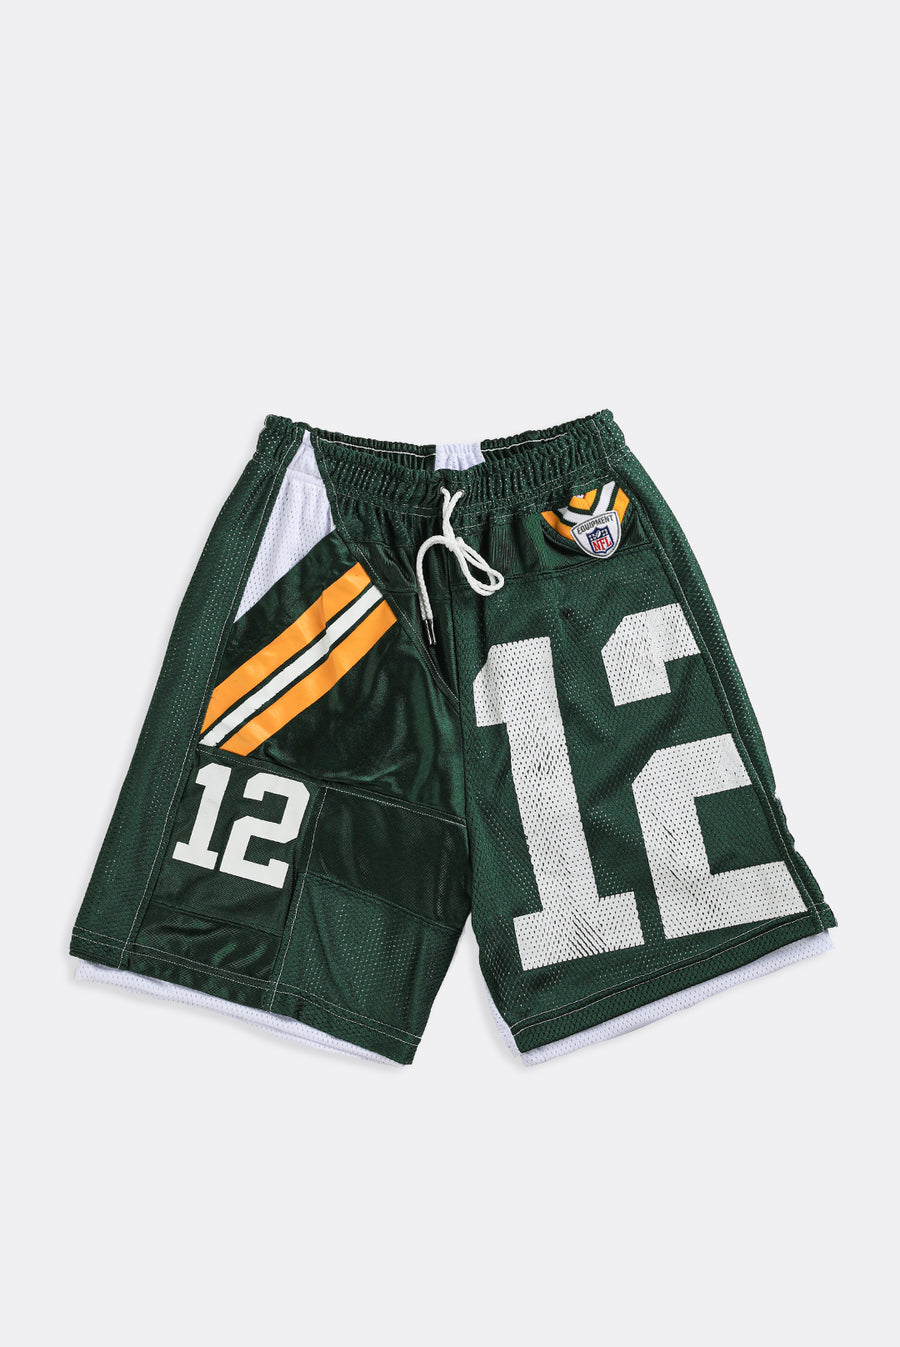 Unisex Rework Packers NFL Jersey Shorts - Women-XS, Men-XXS